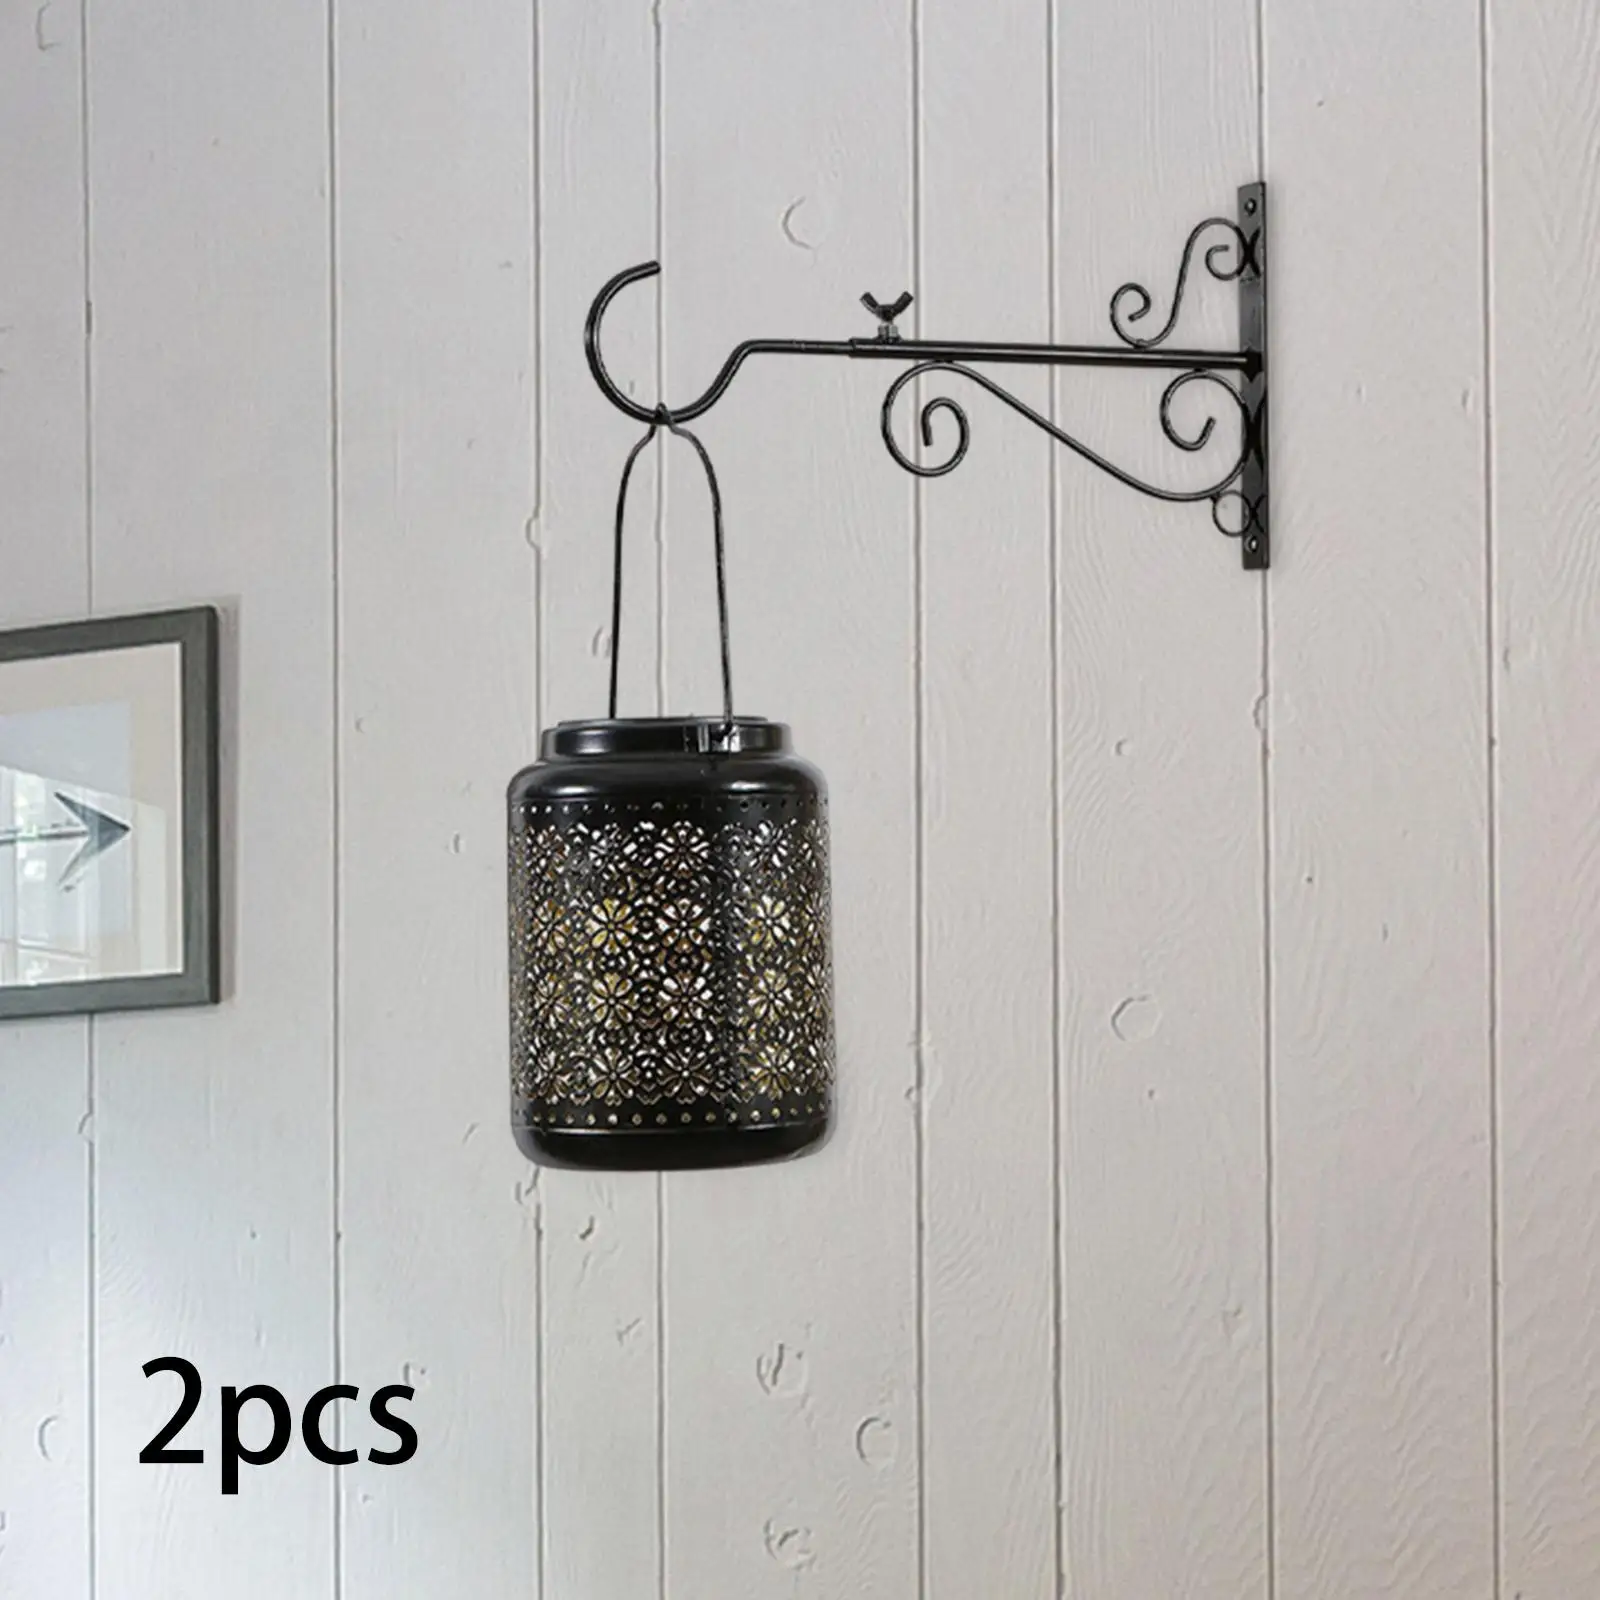 2x Wall Hanging Basket Bracket Screw Included Metal Heavy Duty Plant Hanger Hook for Wind Chimes Hanging Bird Feeders Lanterns